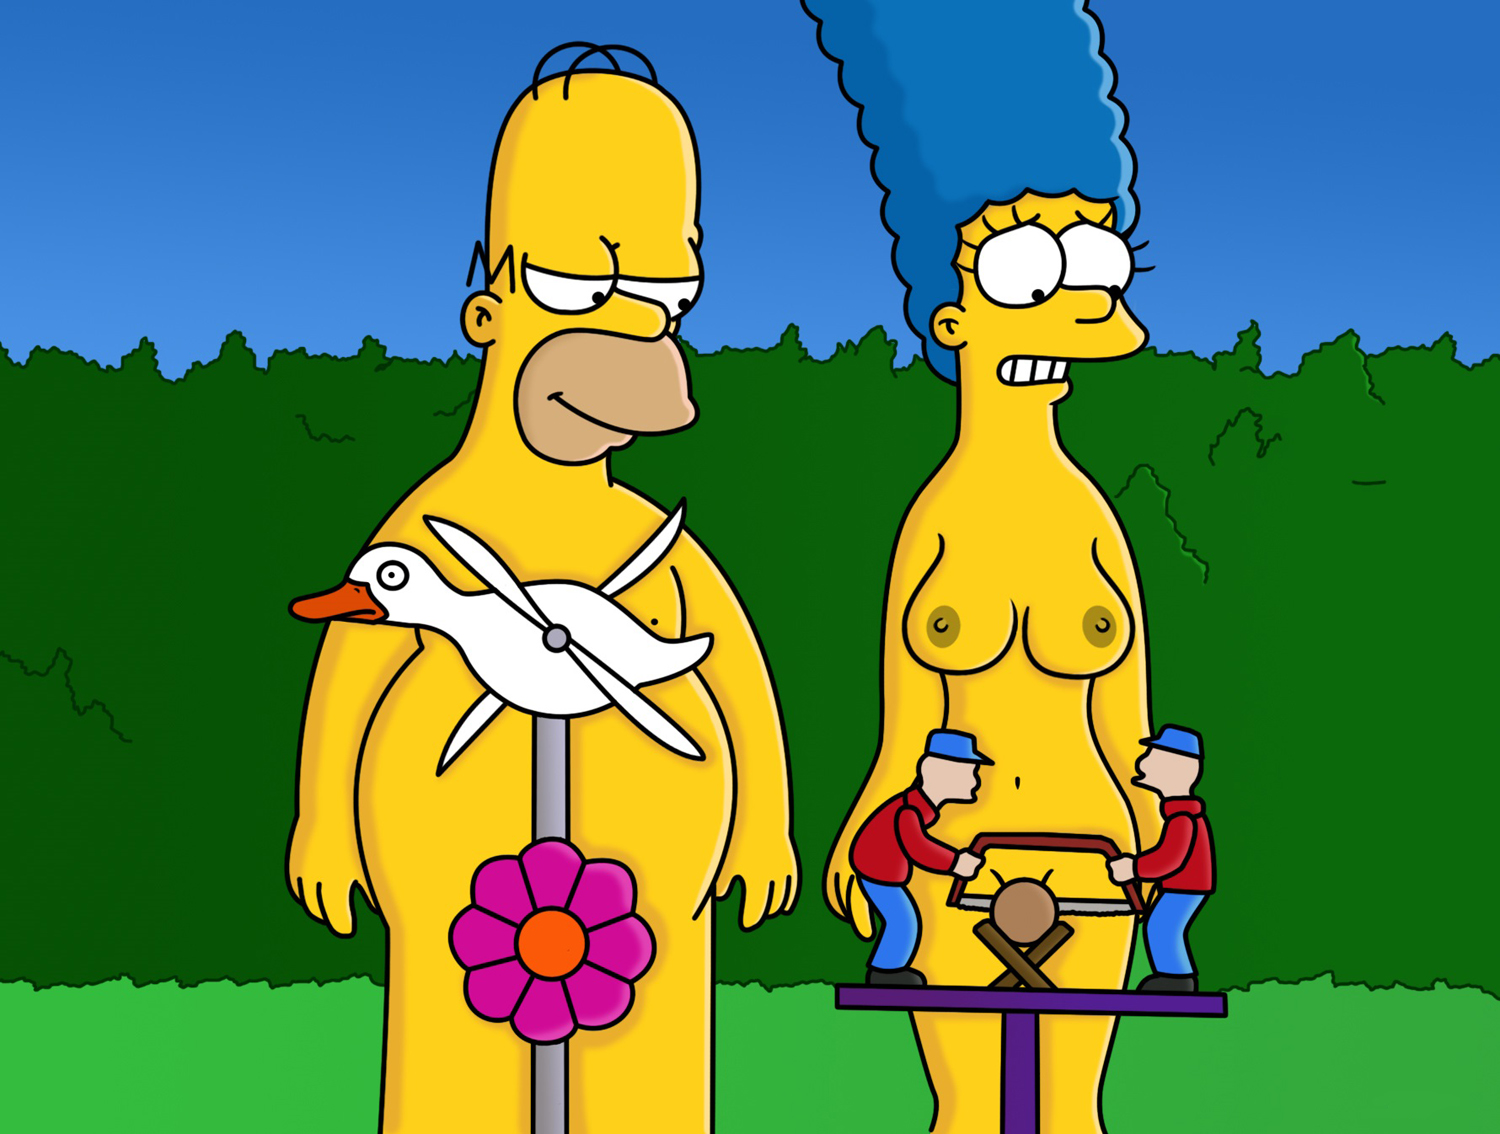 Мардж Симпсон голая. Фото - 15